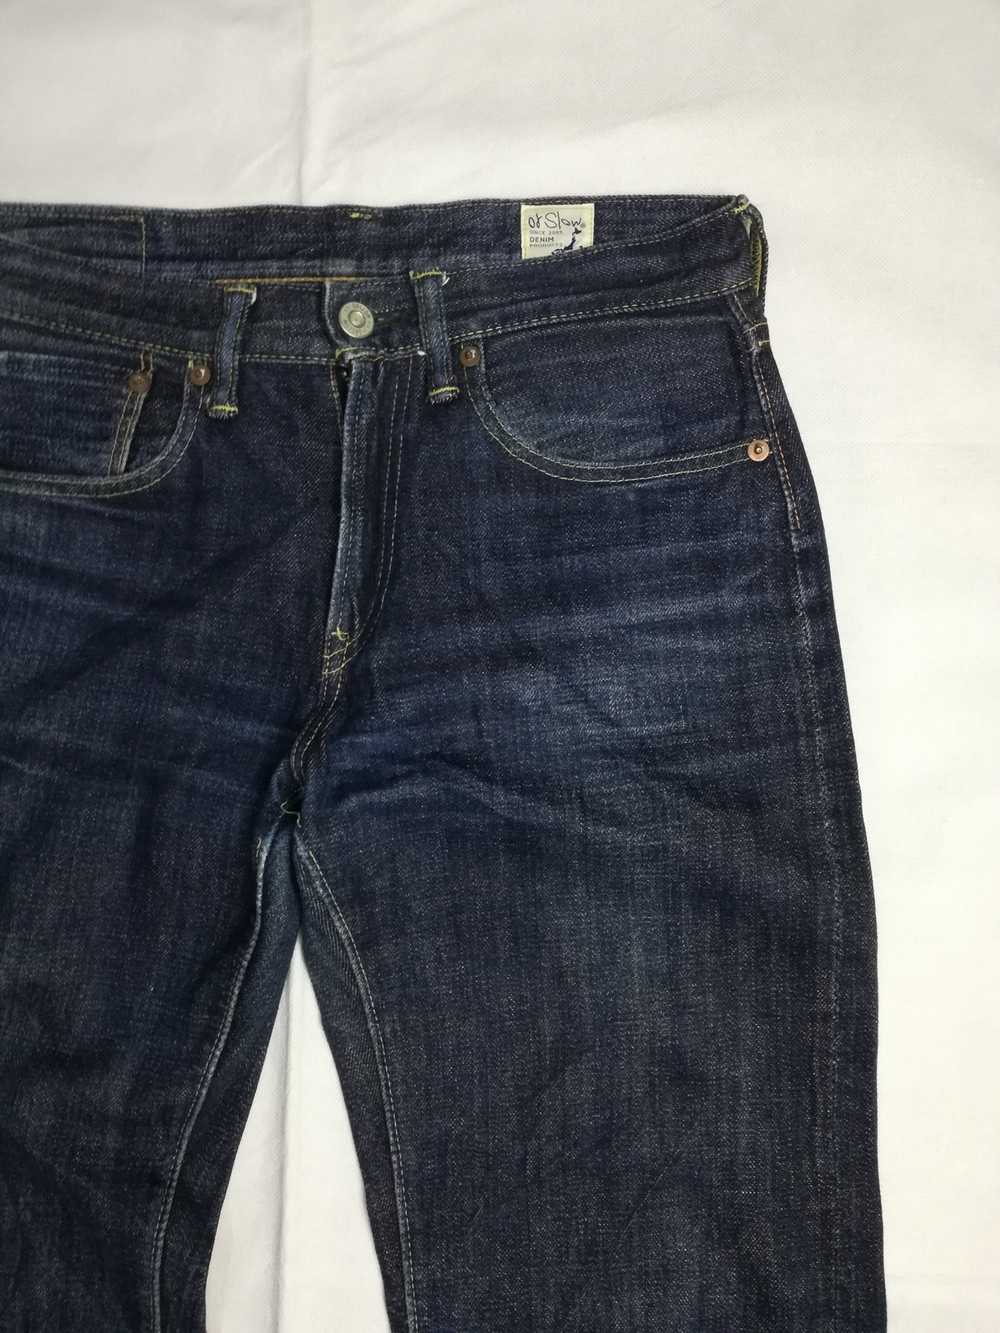 Orslow Orslow Selvedge Denim Jeans - image 3